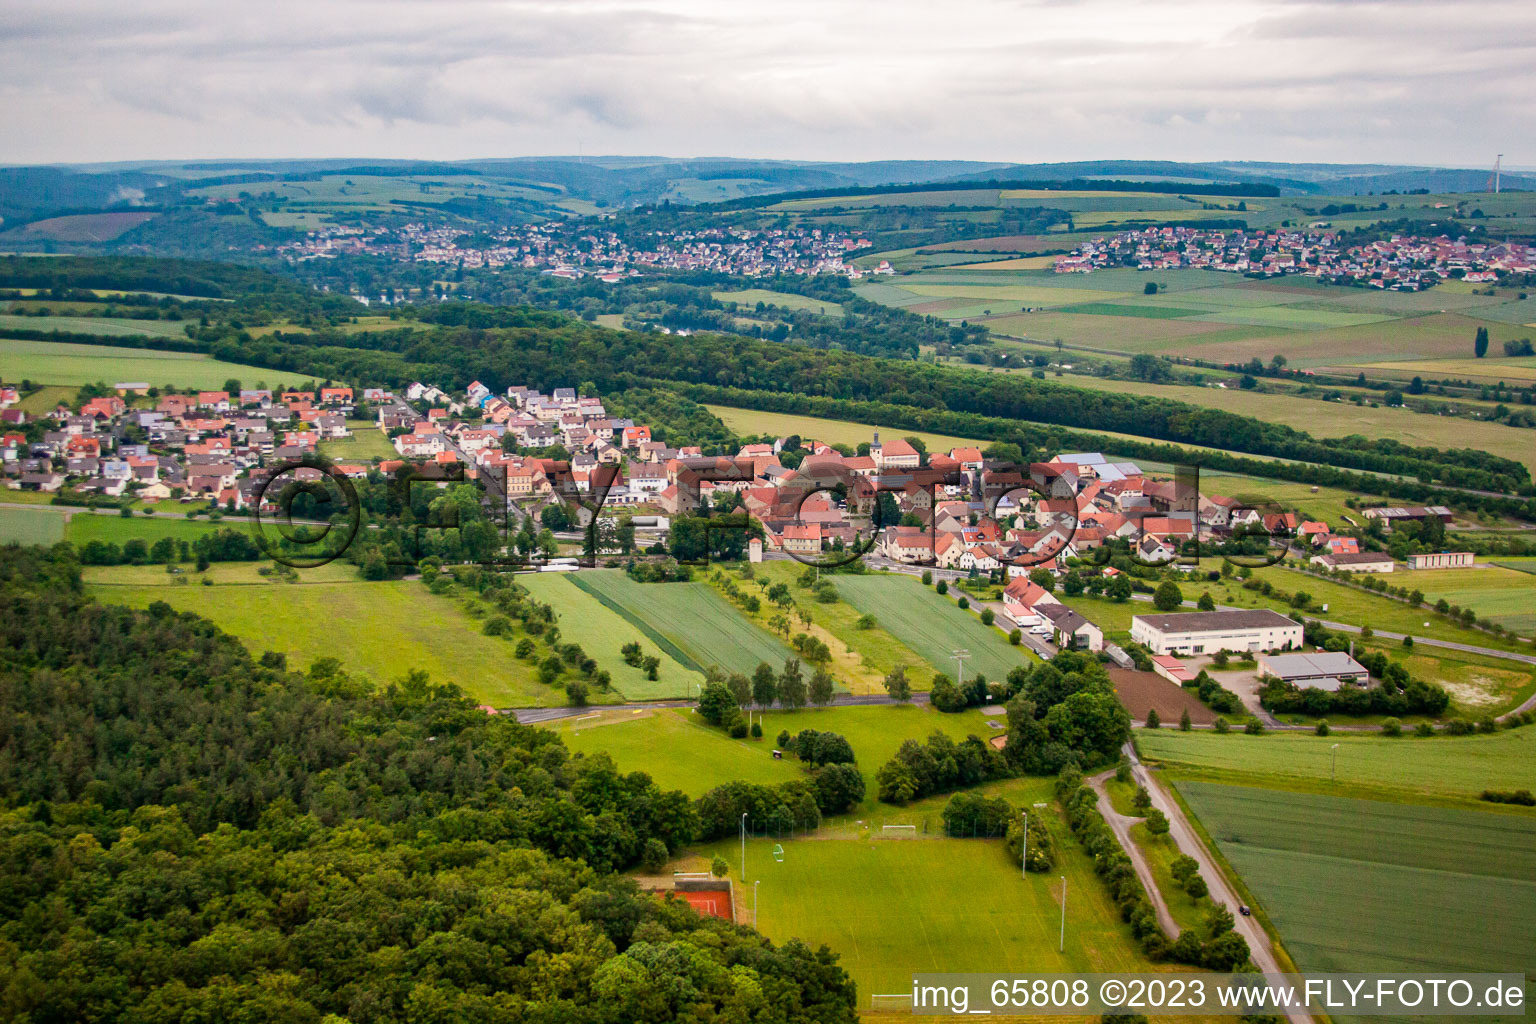 Oblique view of Weyer in Gochsheim in the state Bavaria, Germany